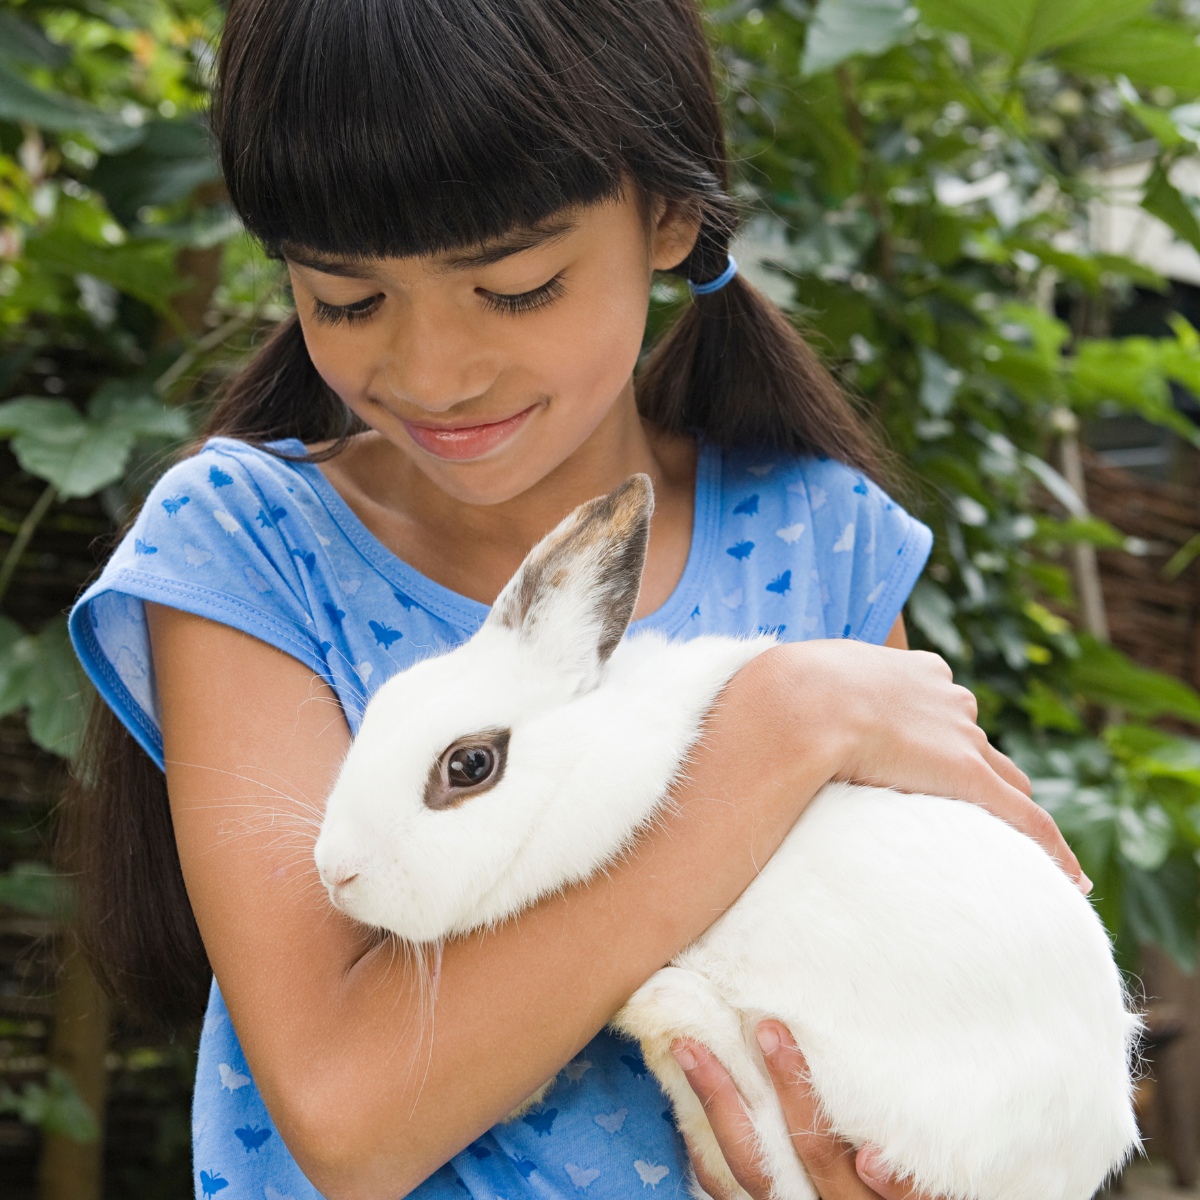 Girl petting a rabbit